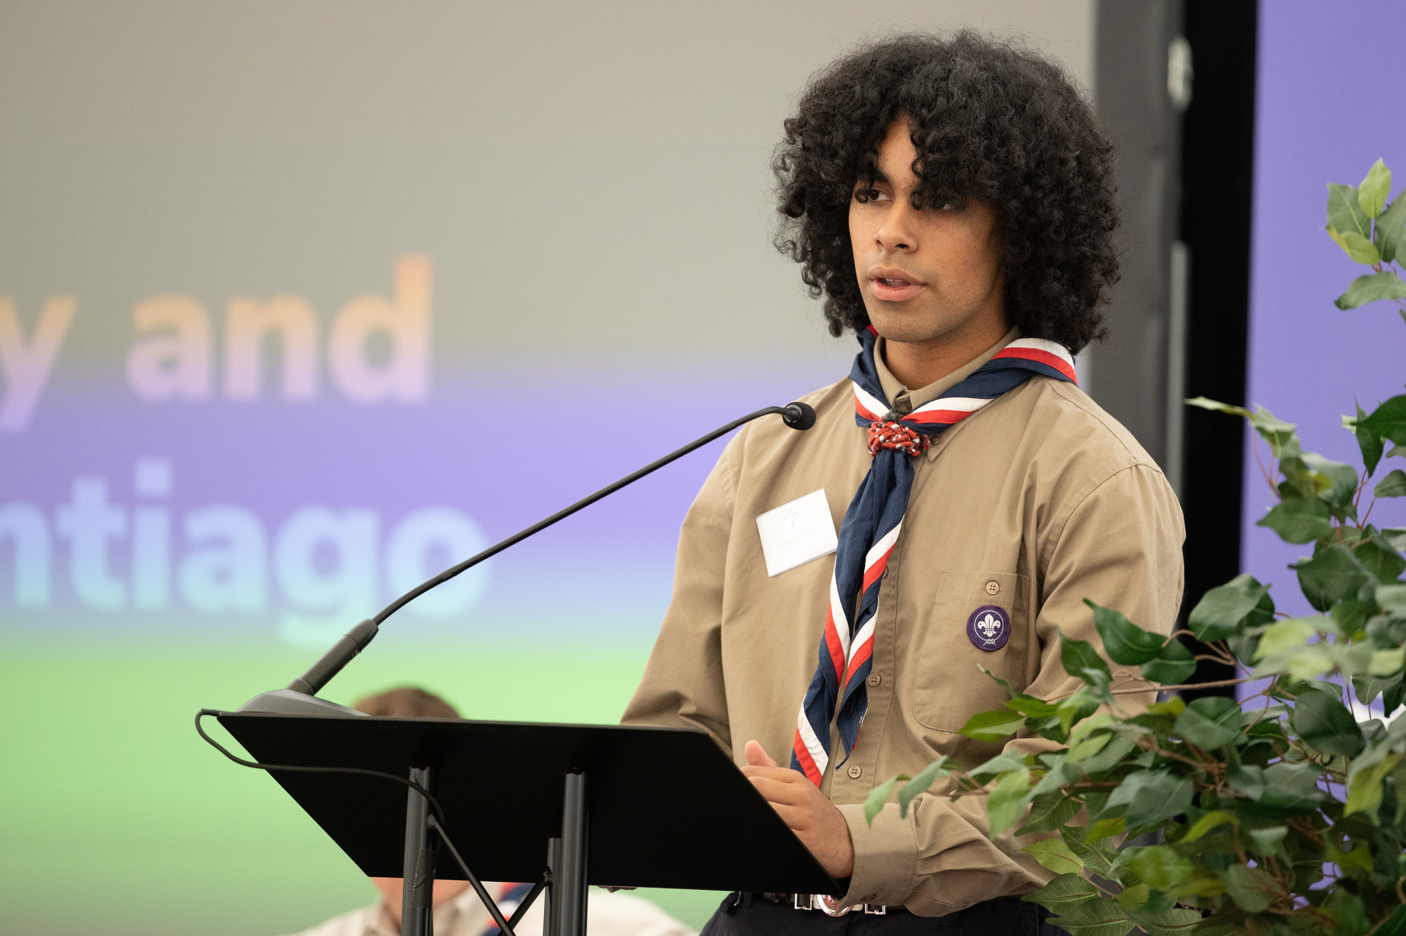 Santiago delivers his speech at Scouts' AGM